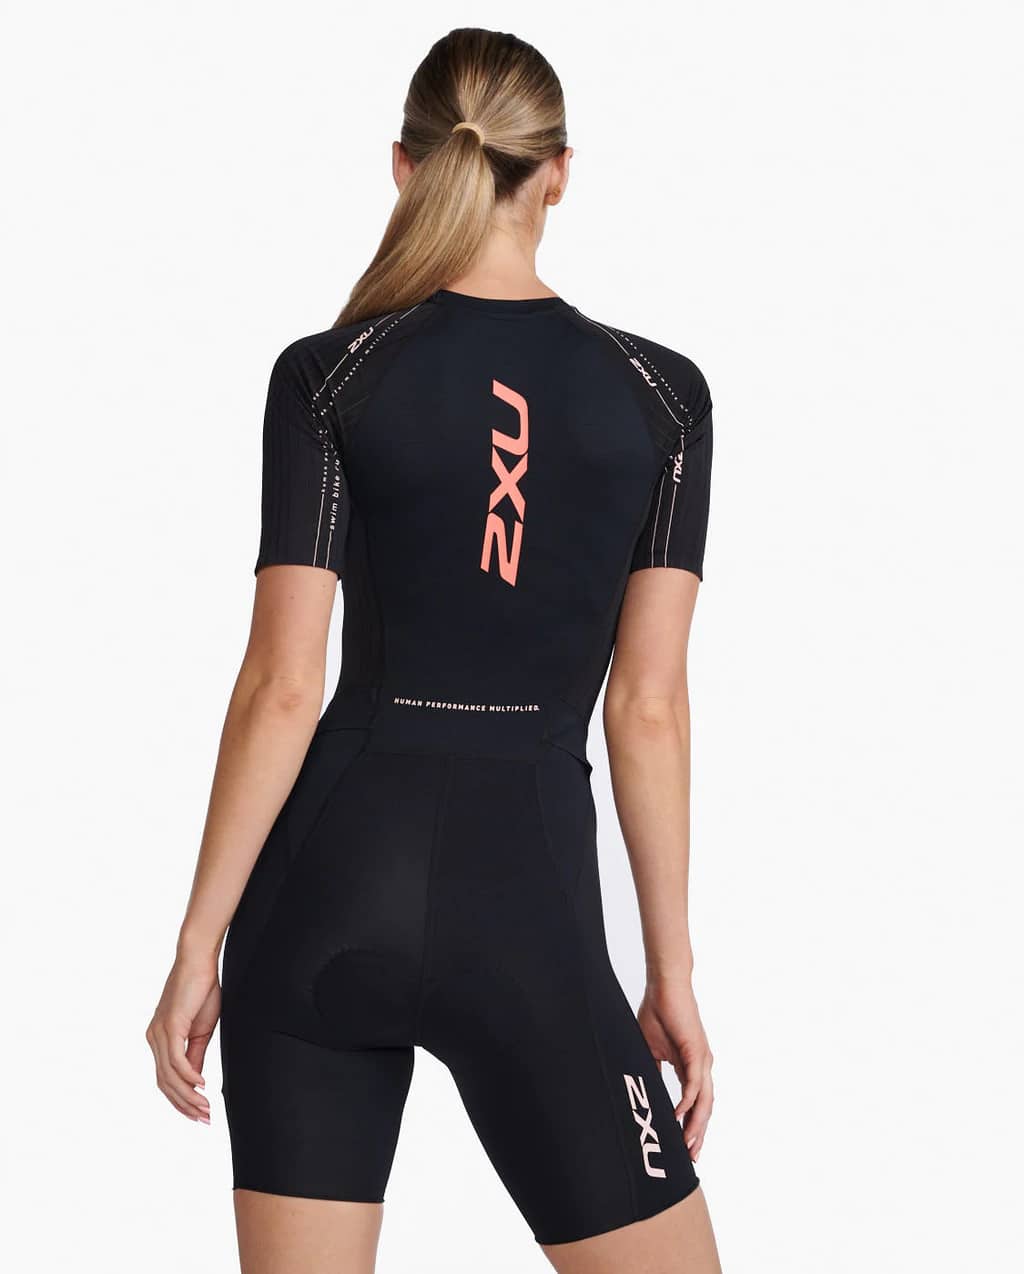 2XU Woman's Aero Sleeved Trisuit Black/Hyper Coral